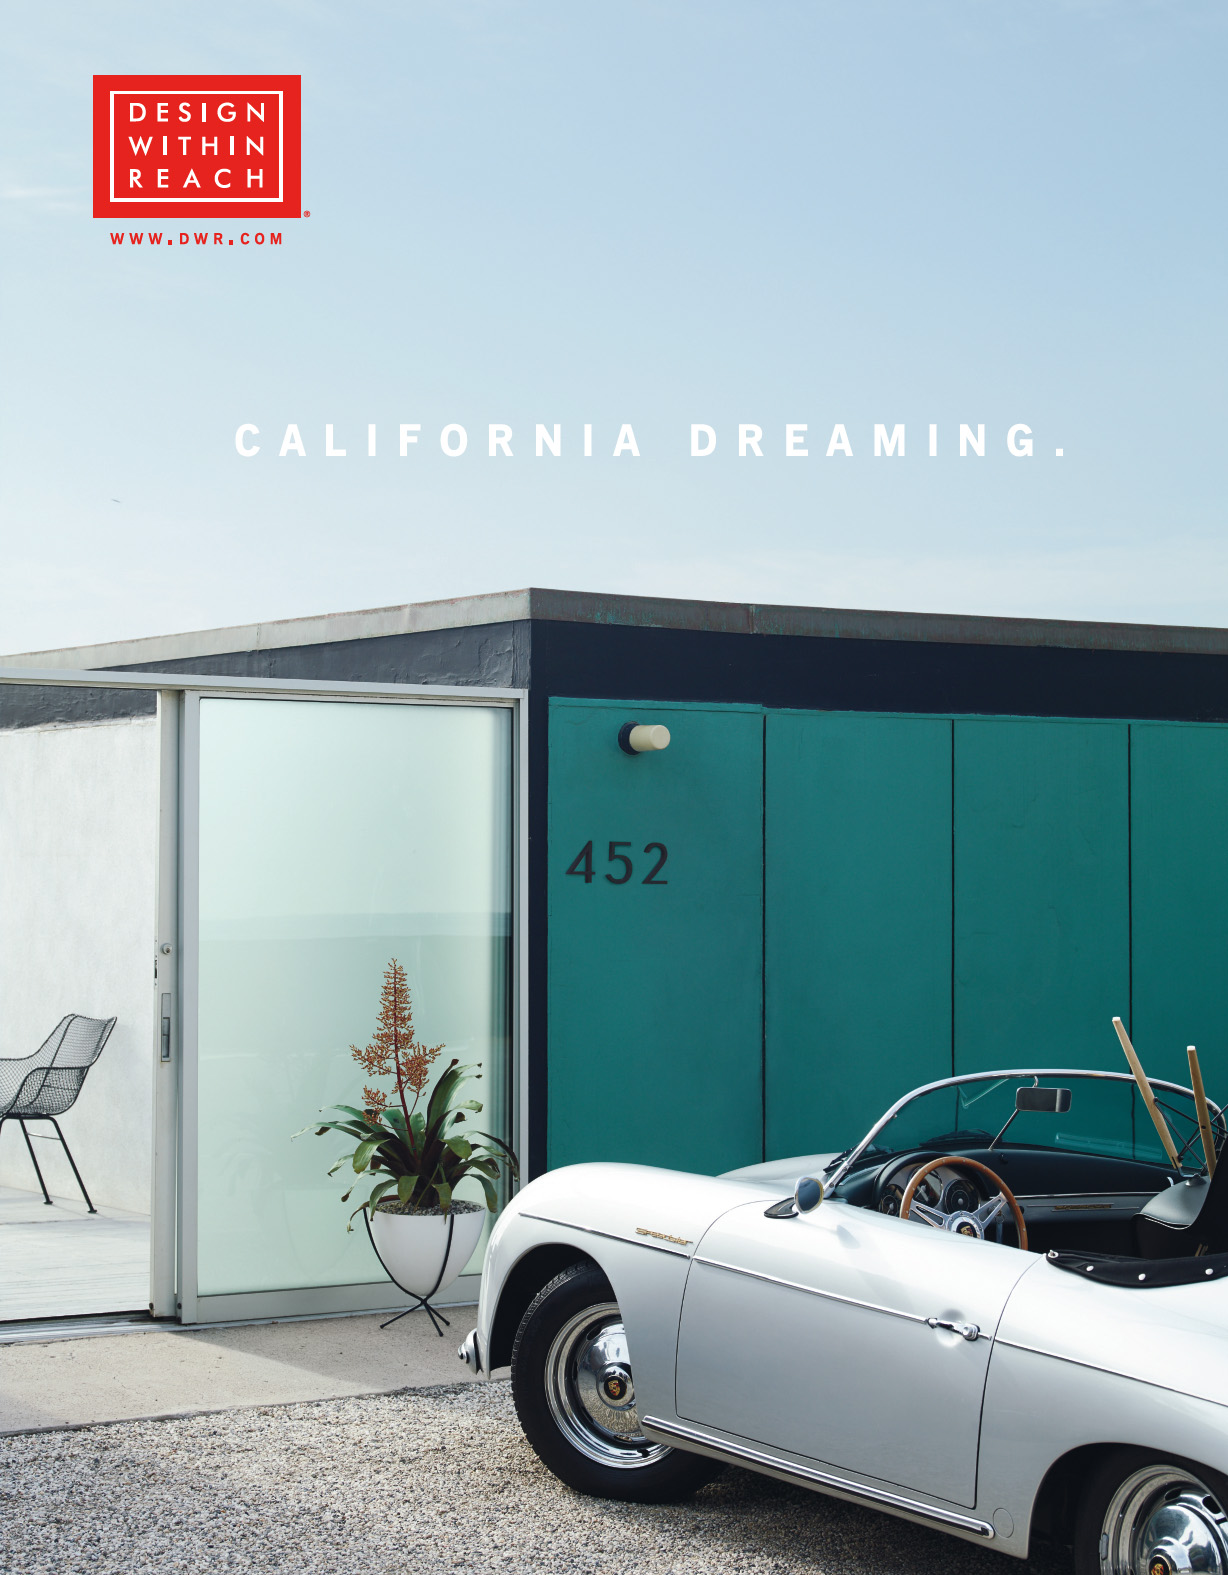 DWR CALIFORNIA DREAMING. - Cover